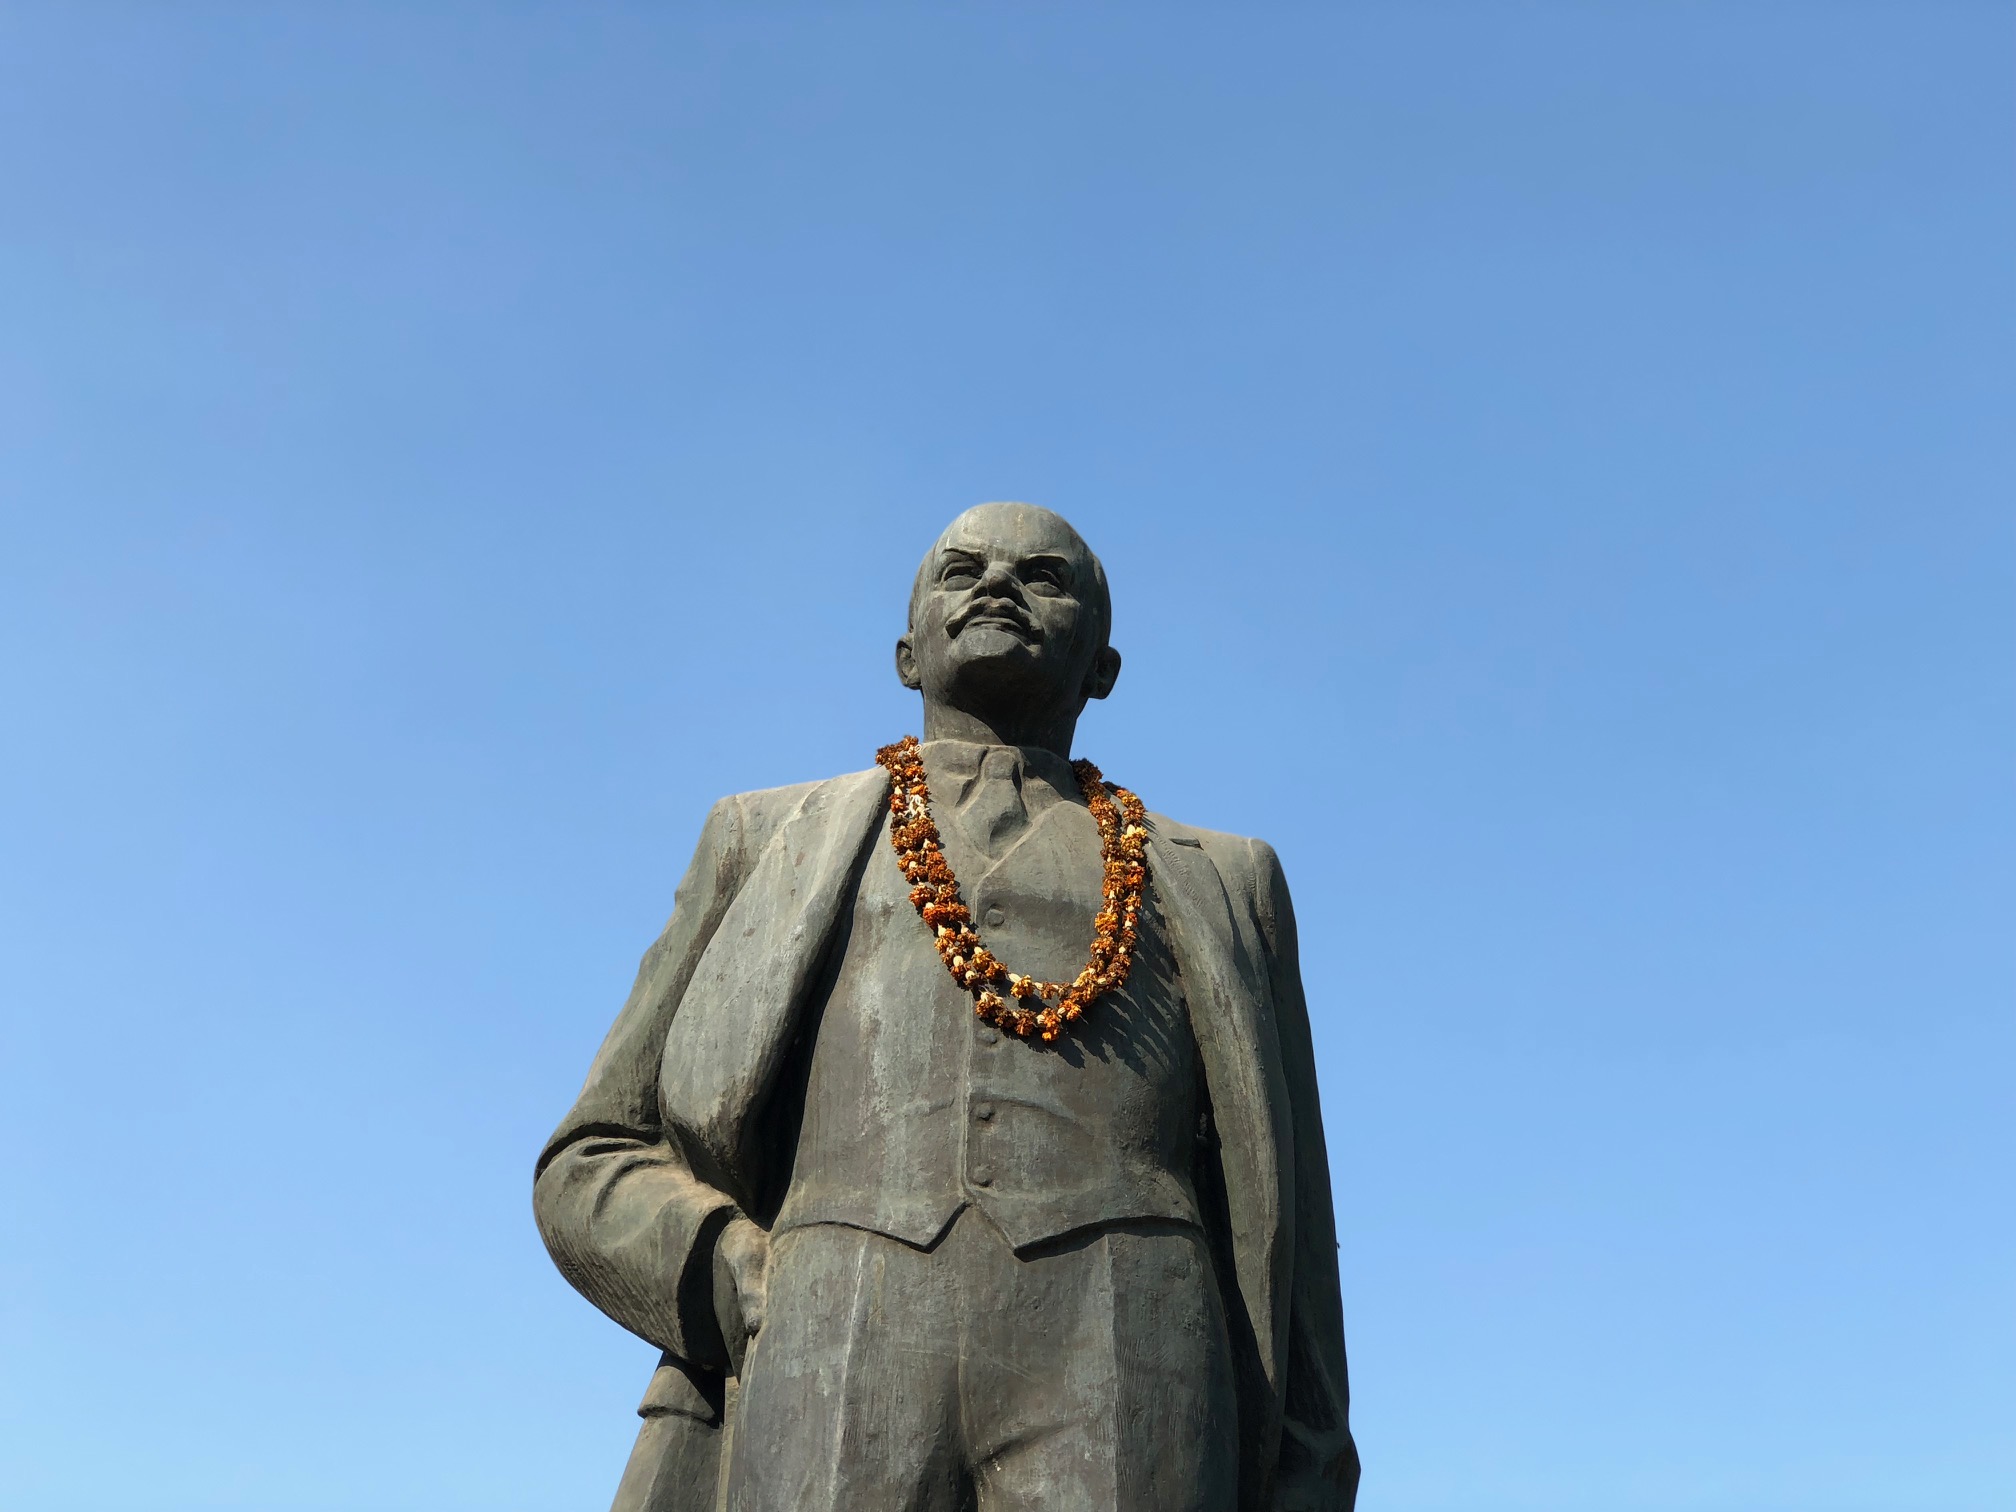 City Landmark - Lenin's Tomb, Nehru Park